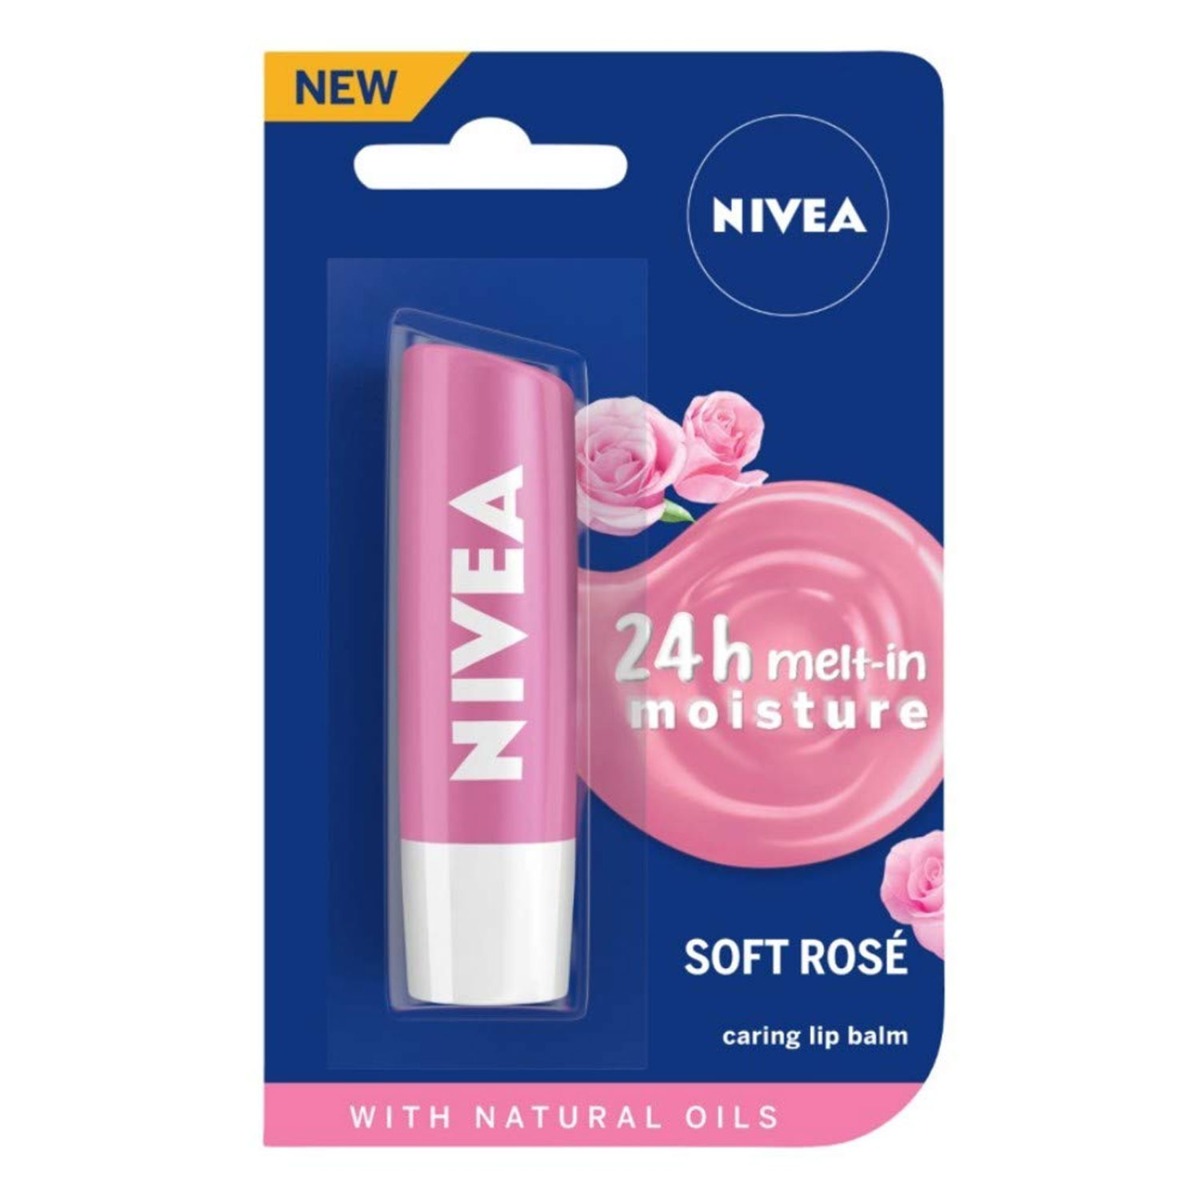 Nivea soft rose caring lip balm, 4.8 gm